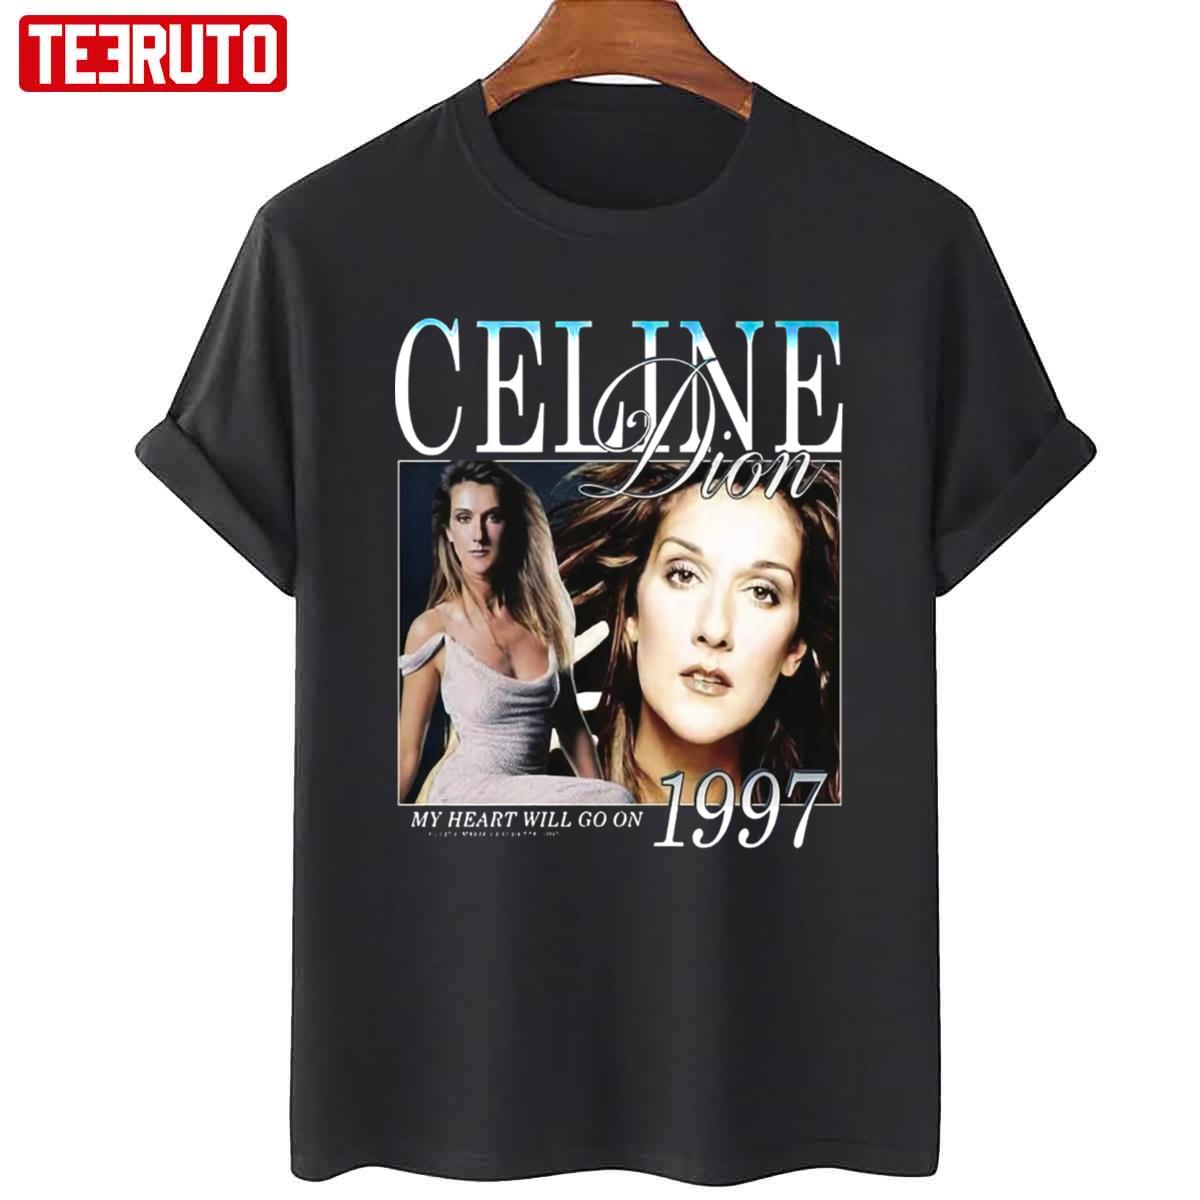 My Heart Will Go On Celine Dion Vintage Unisex T-Shirt - Teeruto